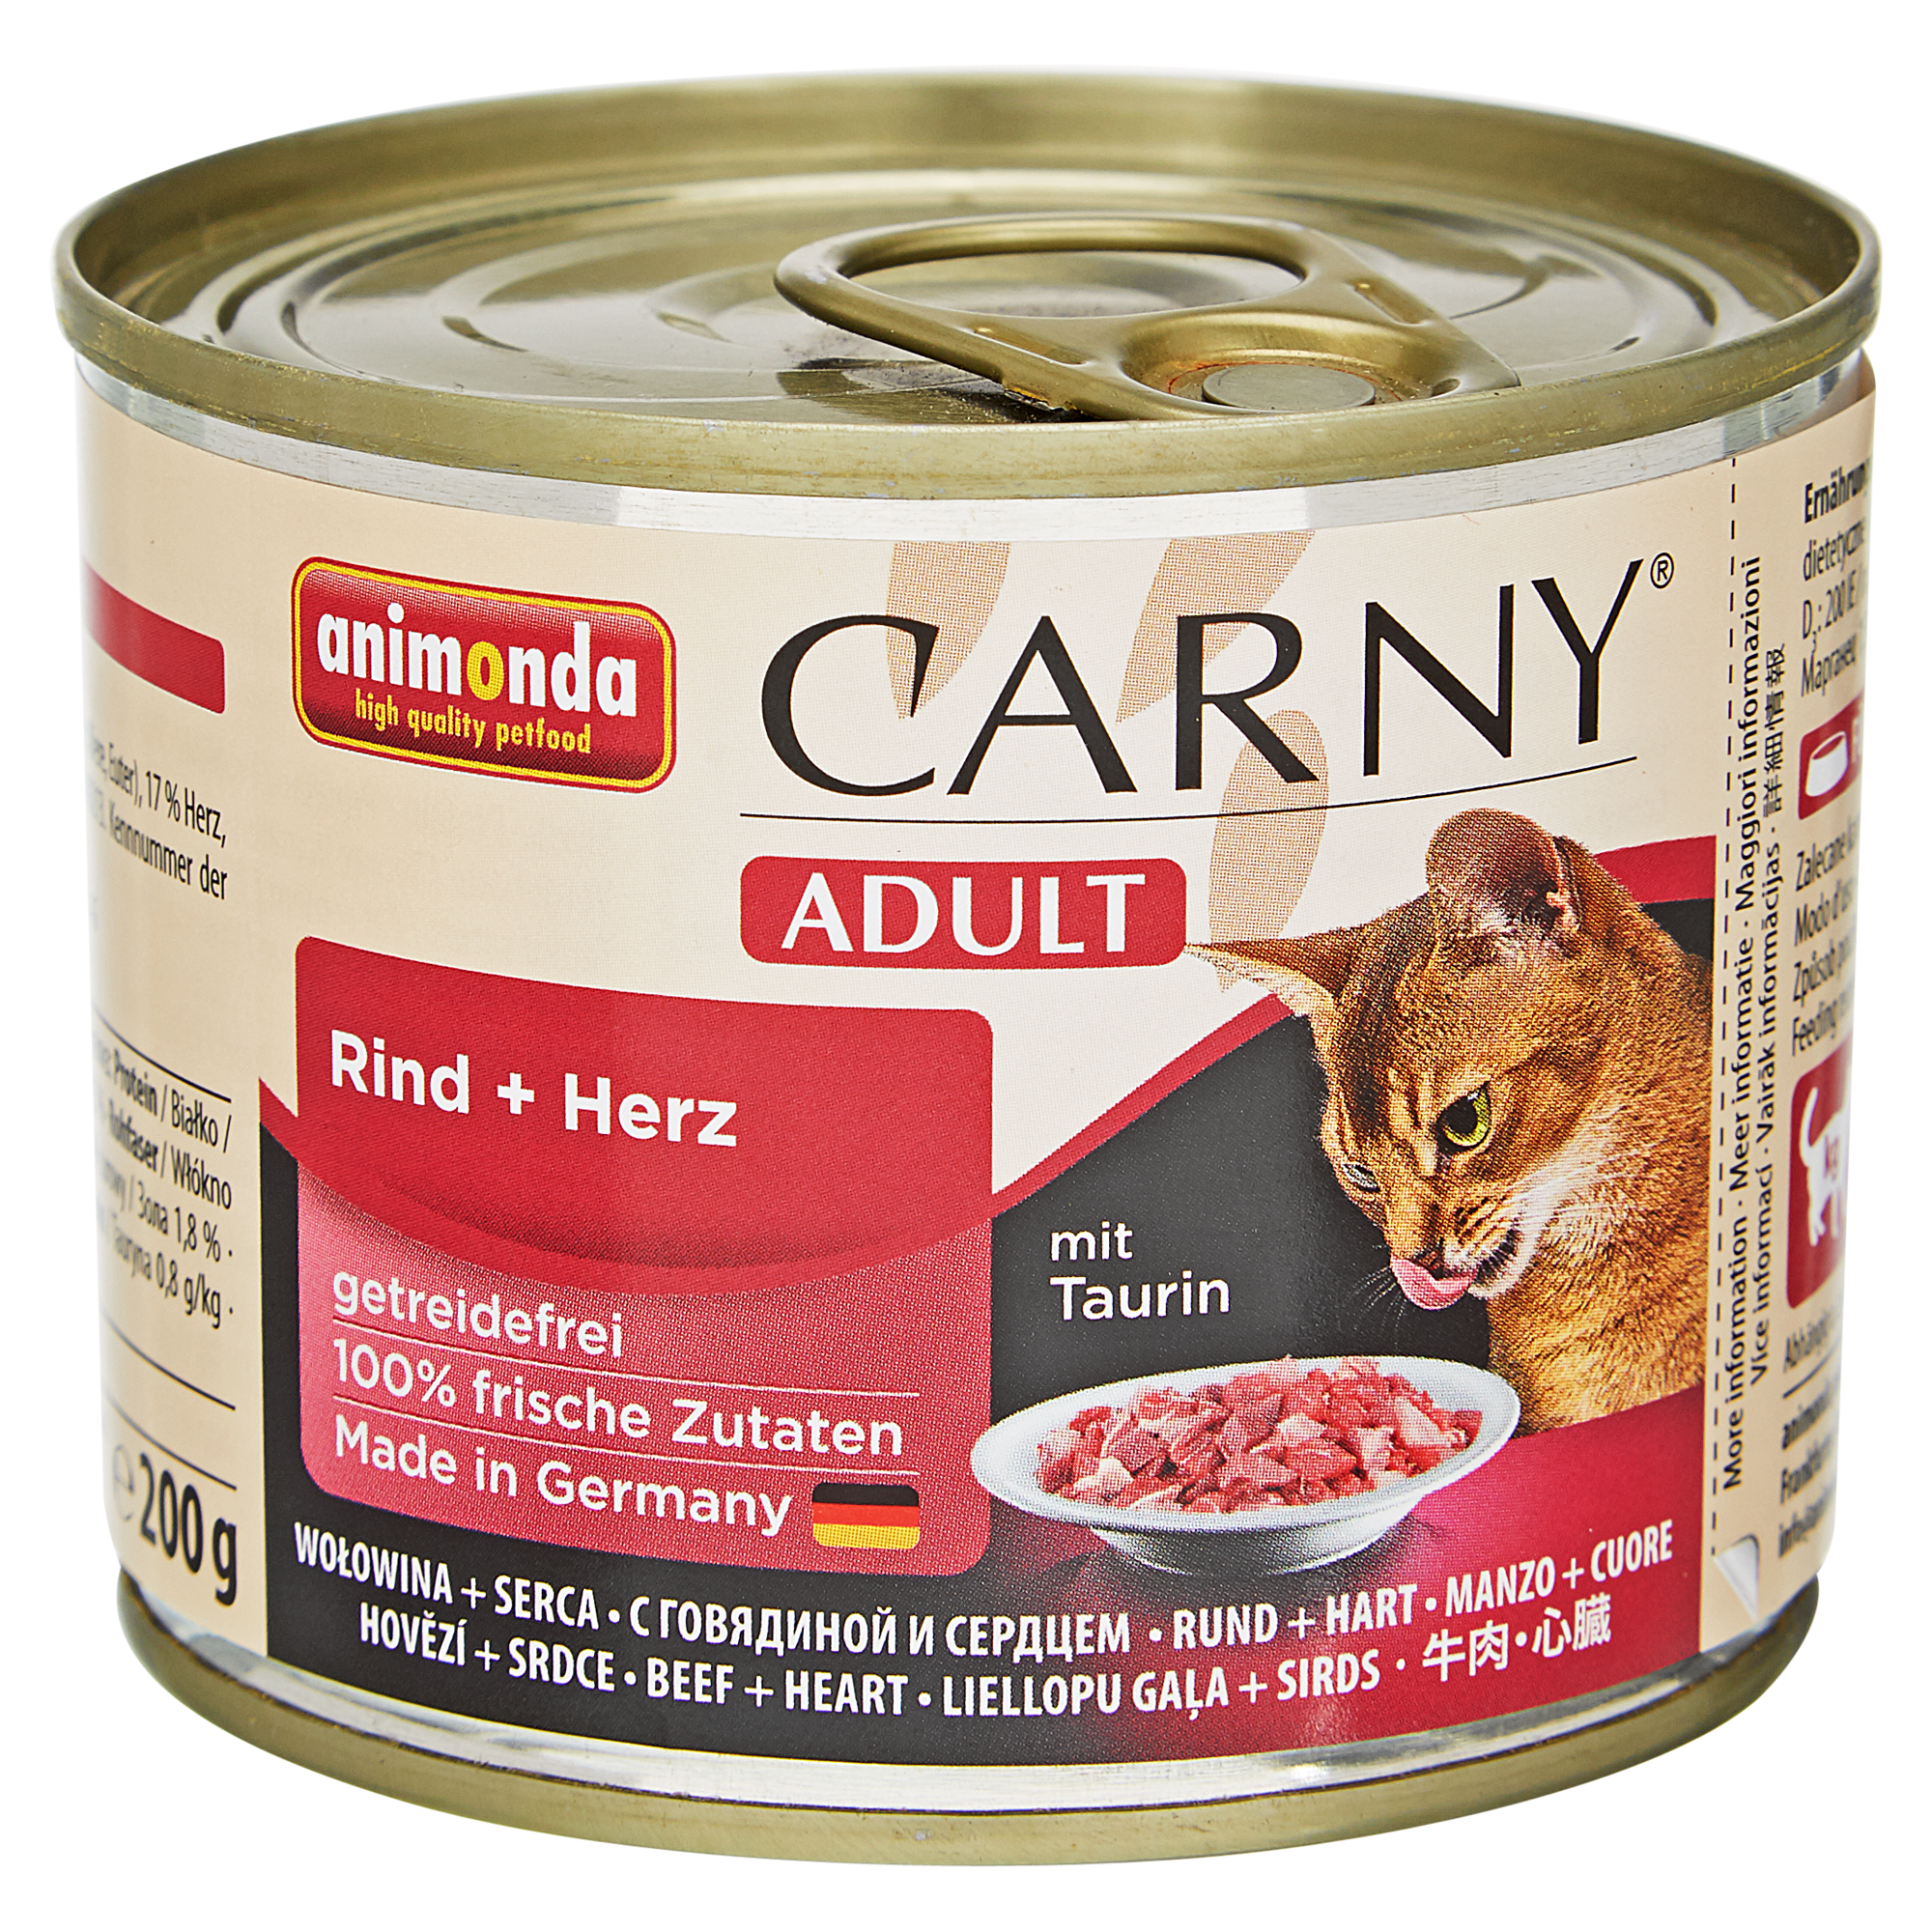 Katzennassfutter "Carny" Adult mit Rind/Herz 200 g + product picture